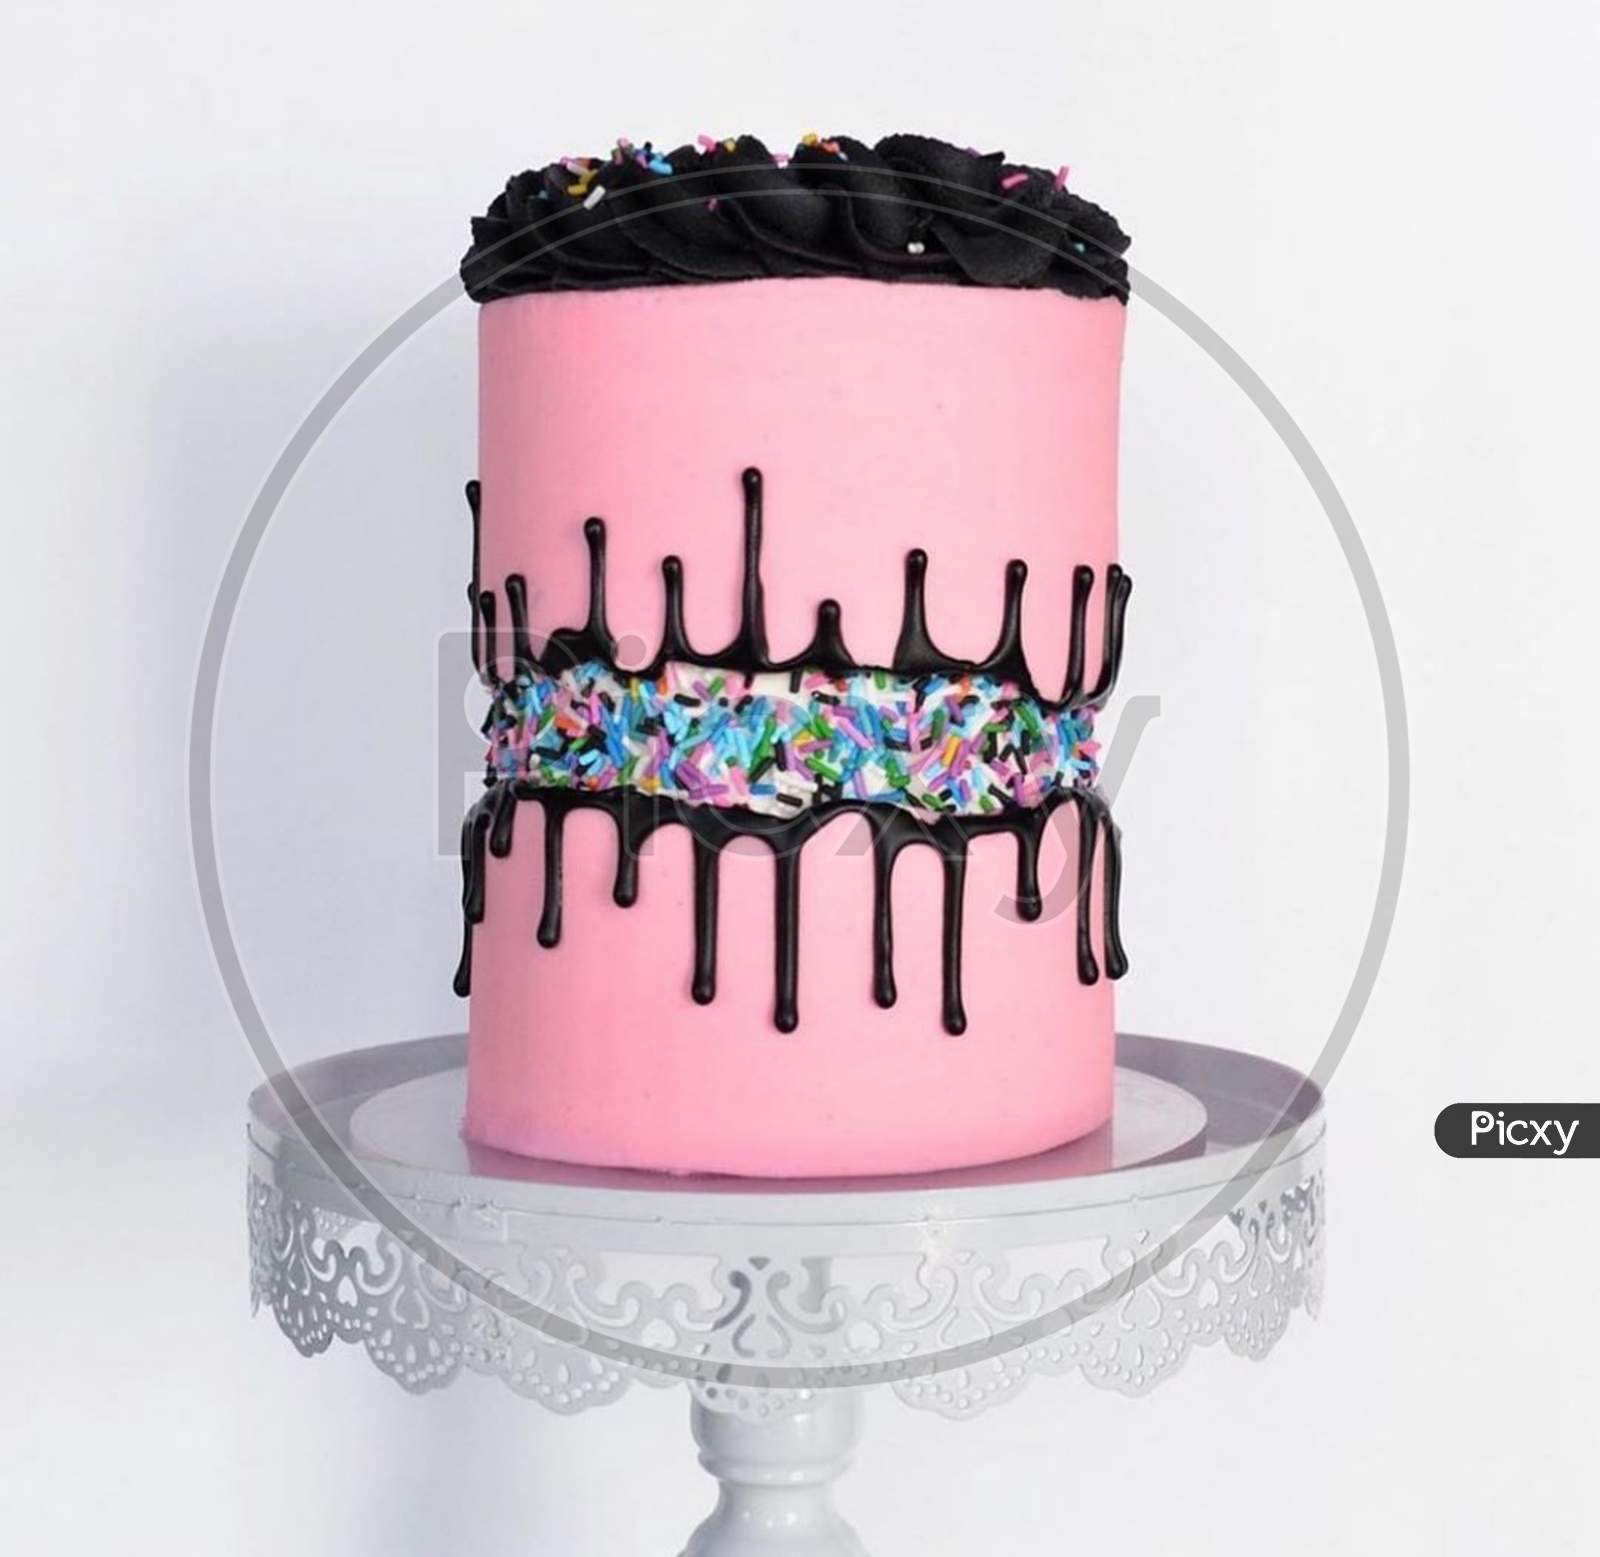 A pink chocolate birthday cake